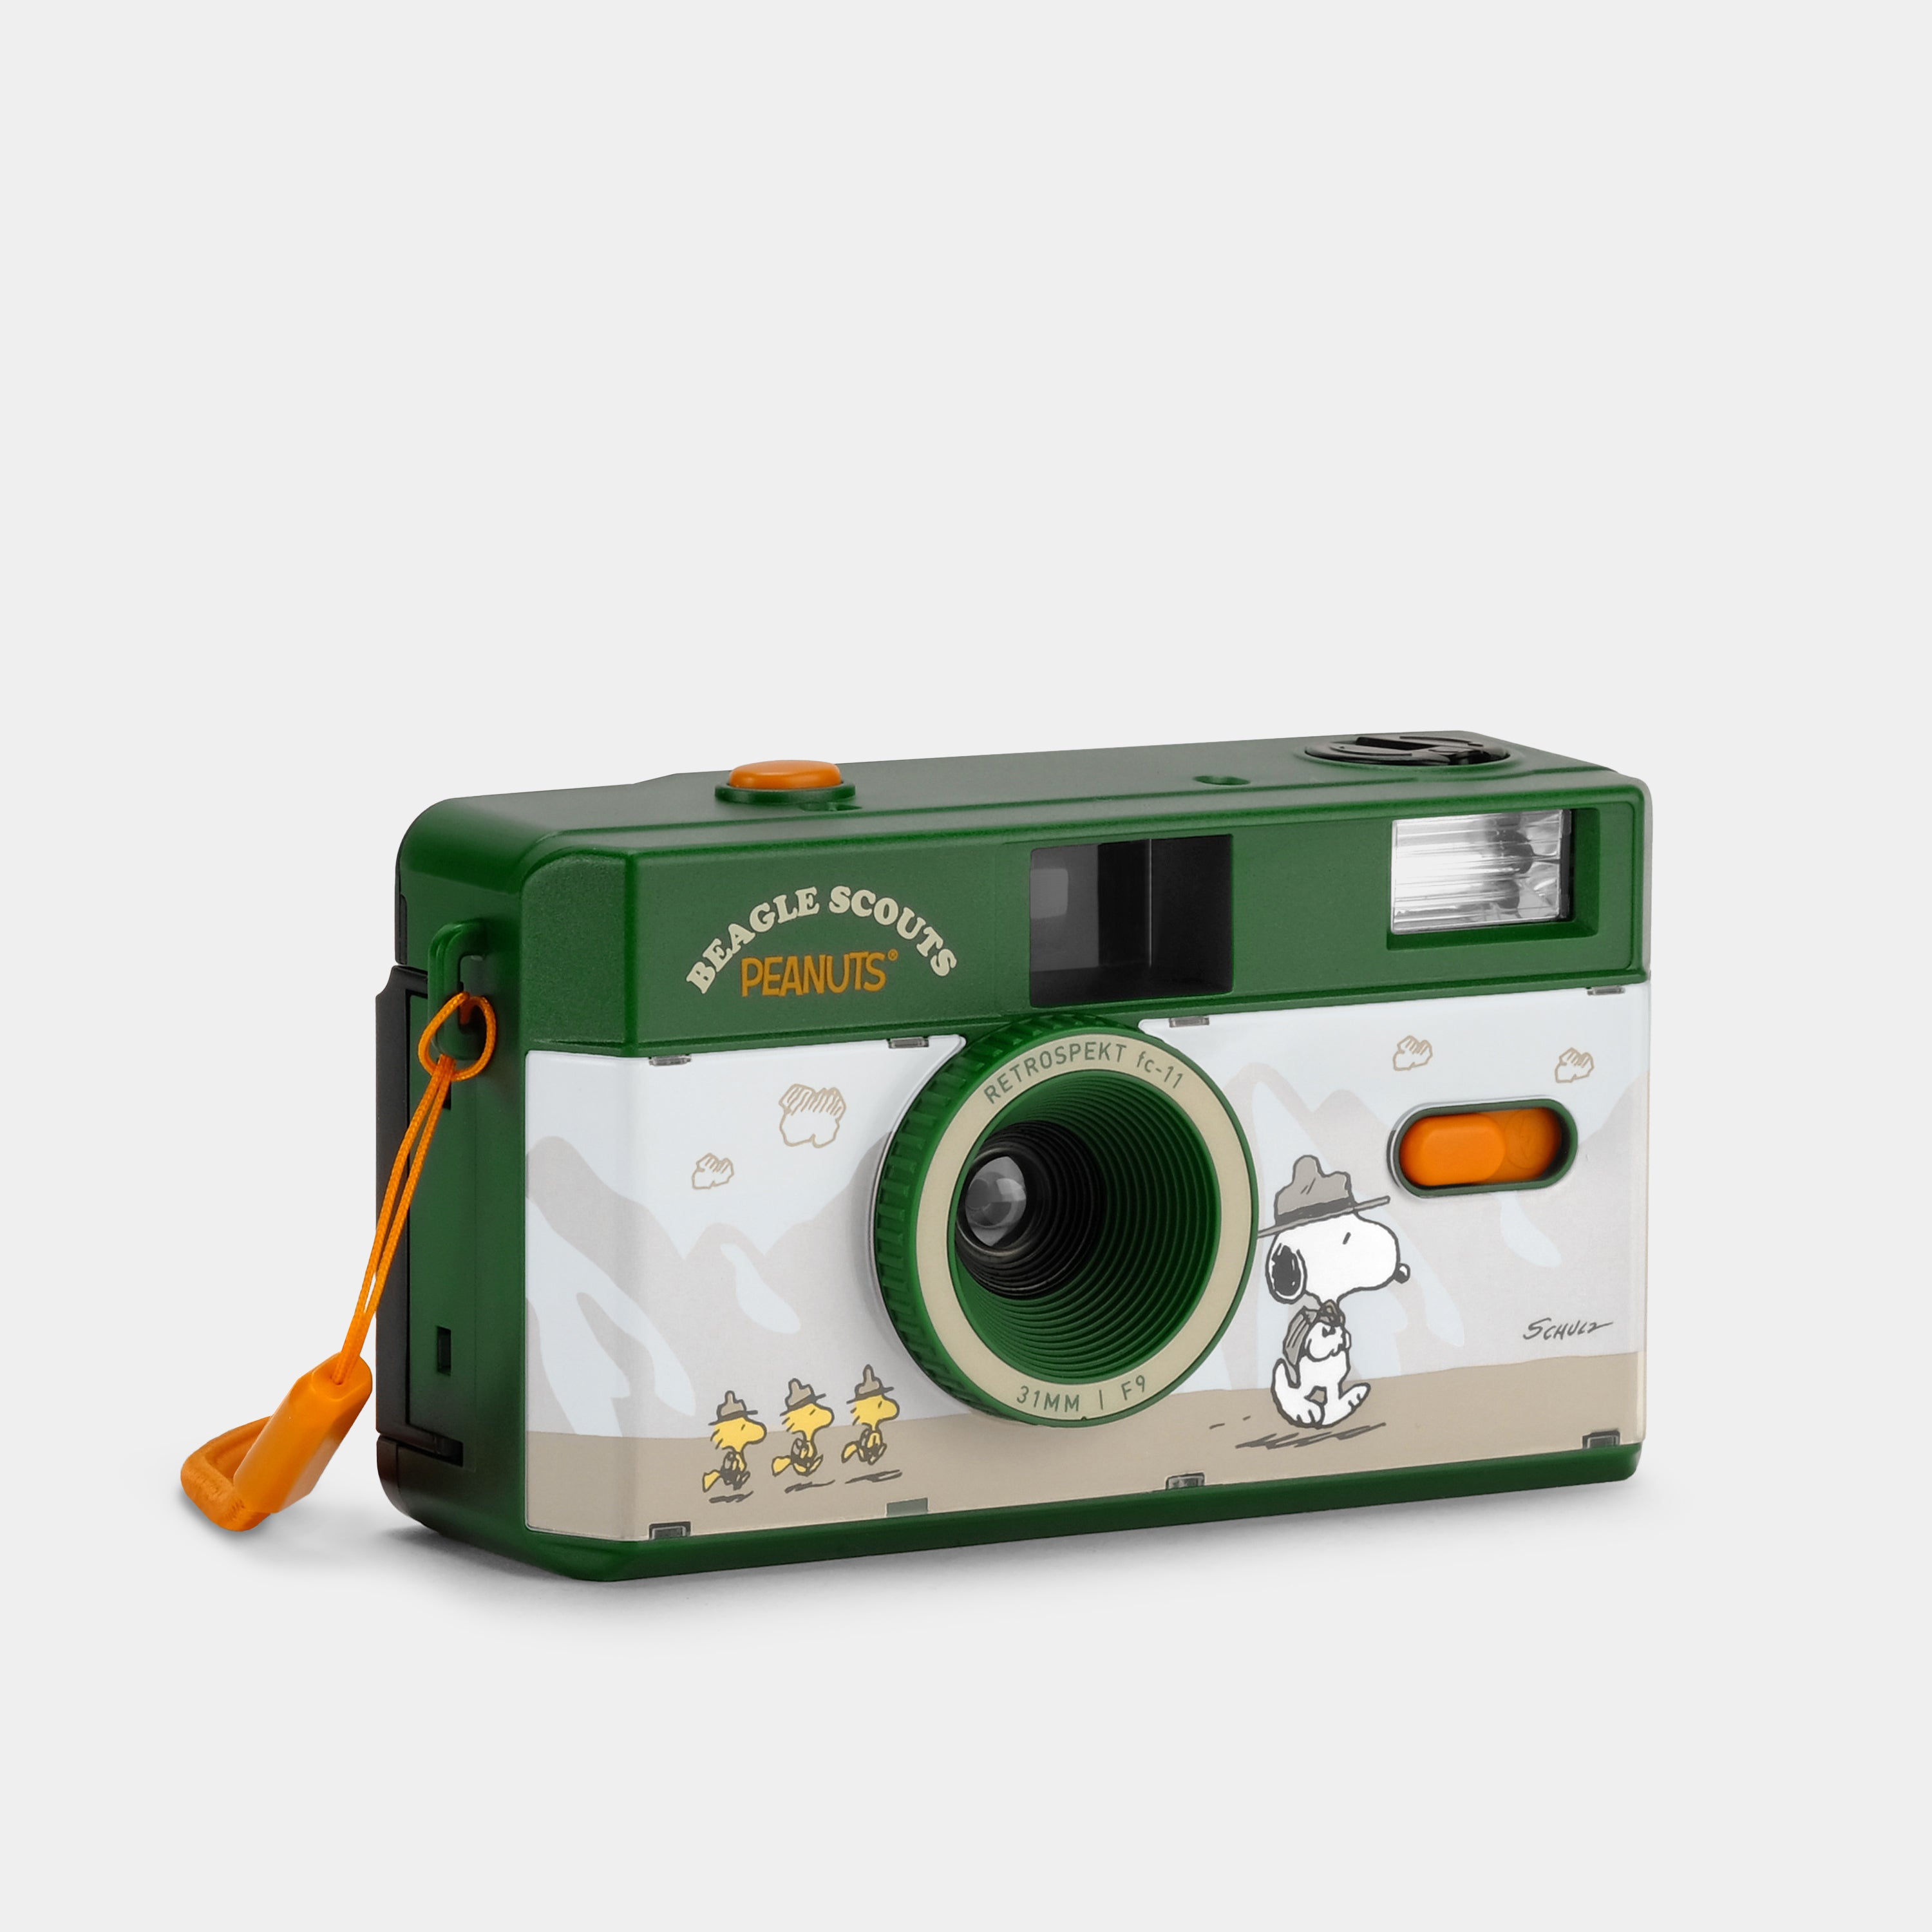 *Preorder* Peanuts Beagle Scouts Retrospekt FC-11 35mm Film Camera